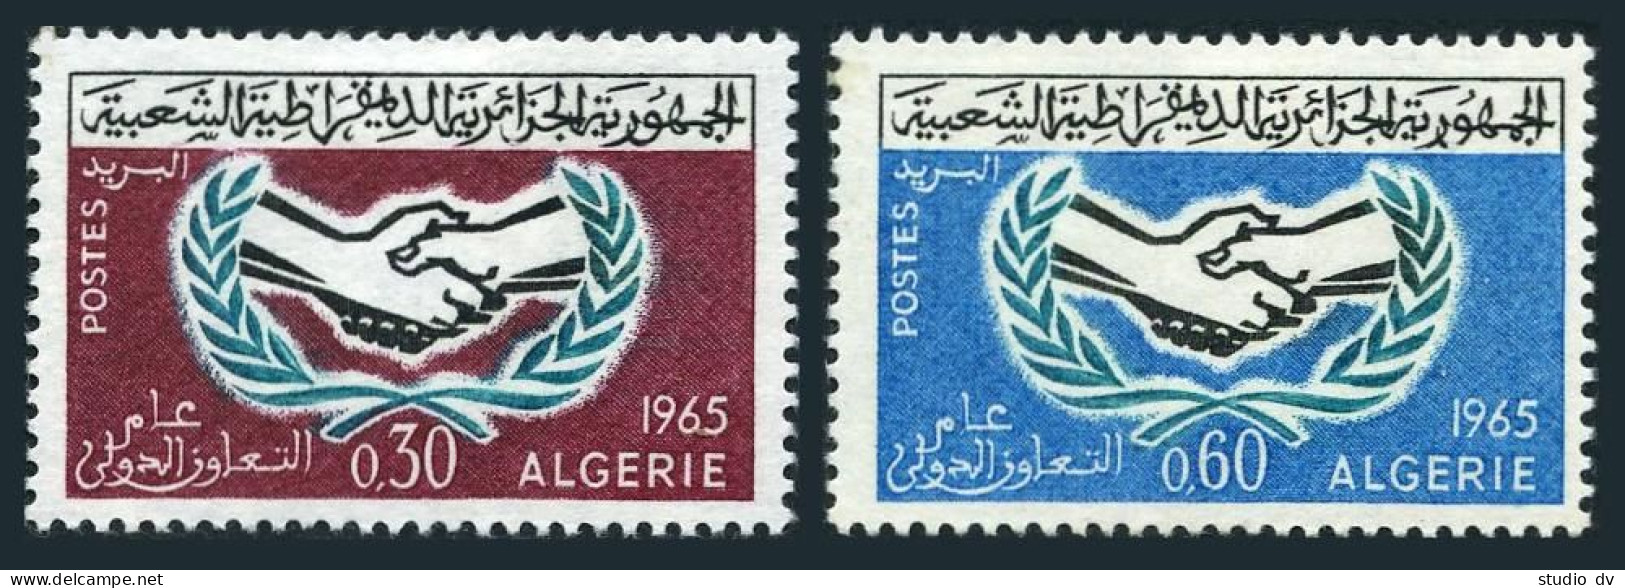 Algeria 337-338,MNH.Michel 437-438. Cooperation Year ICY-1965.Emblem. - Algerije (1962-...)